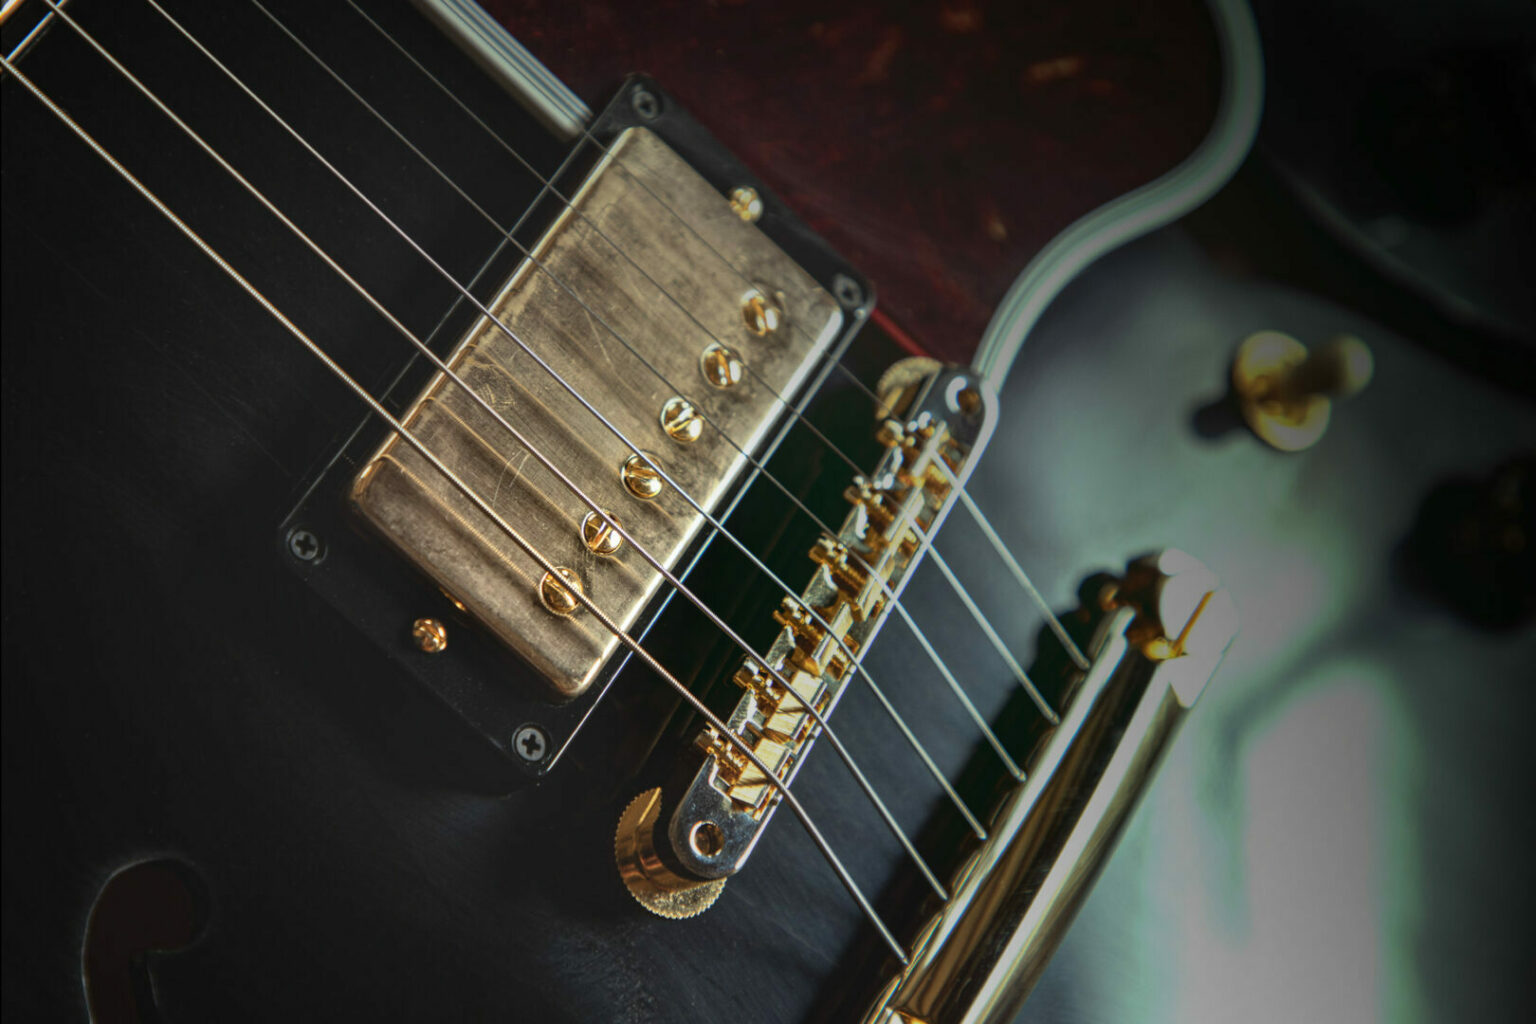 Closeup of an electric guitar with humbuckers